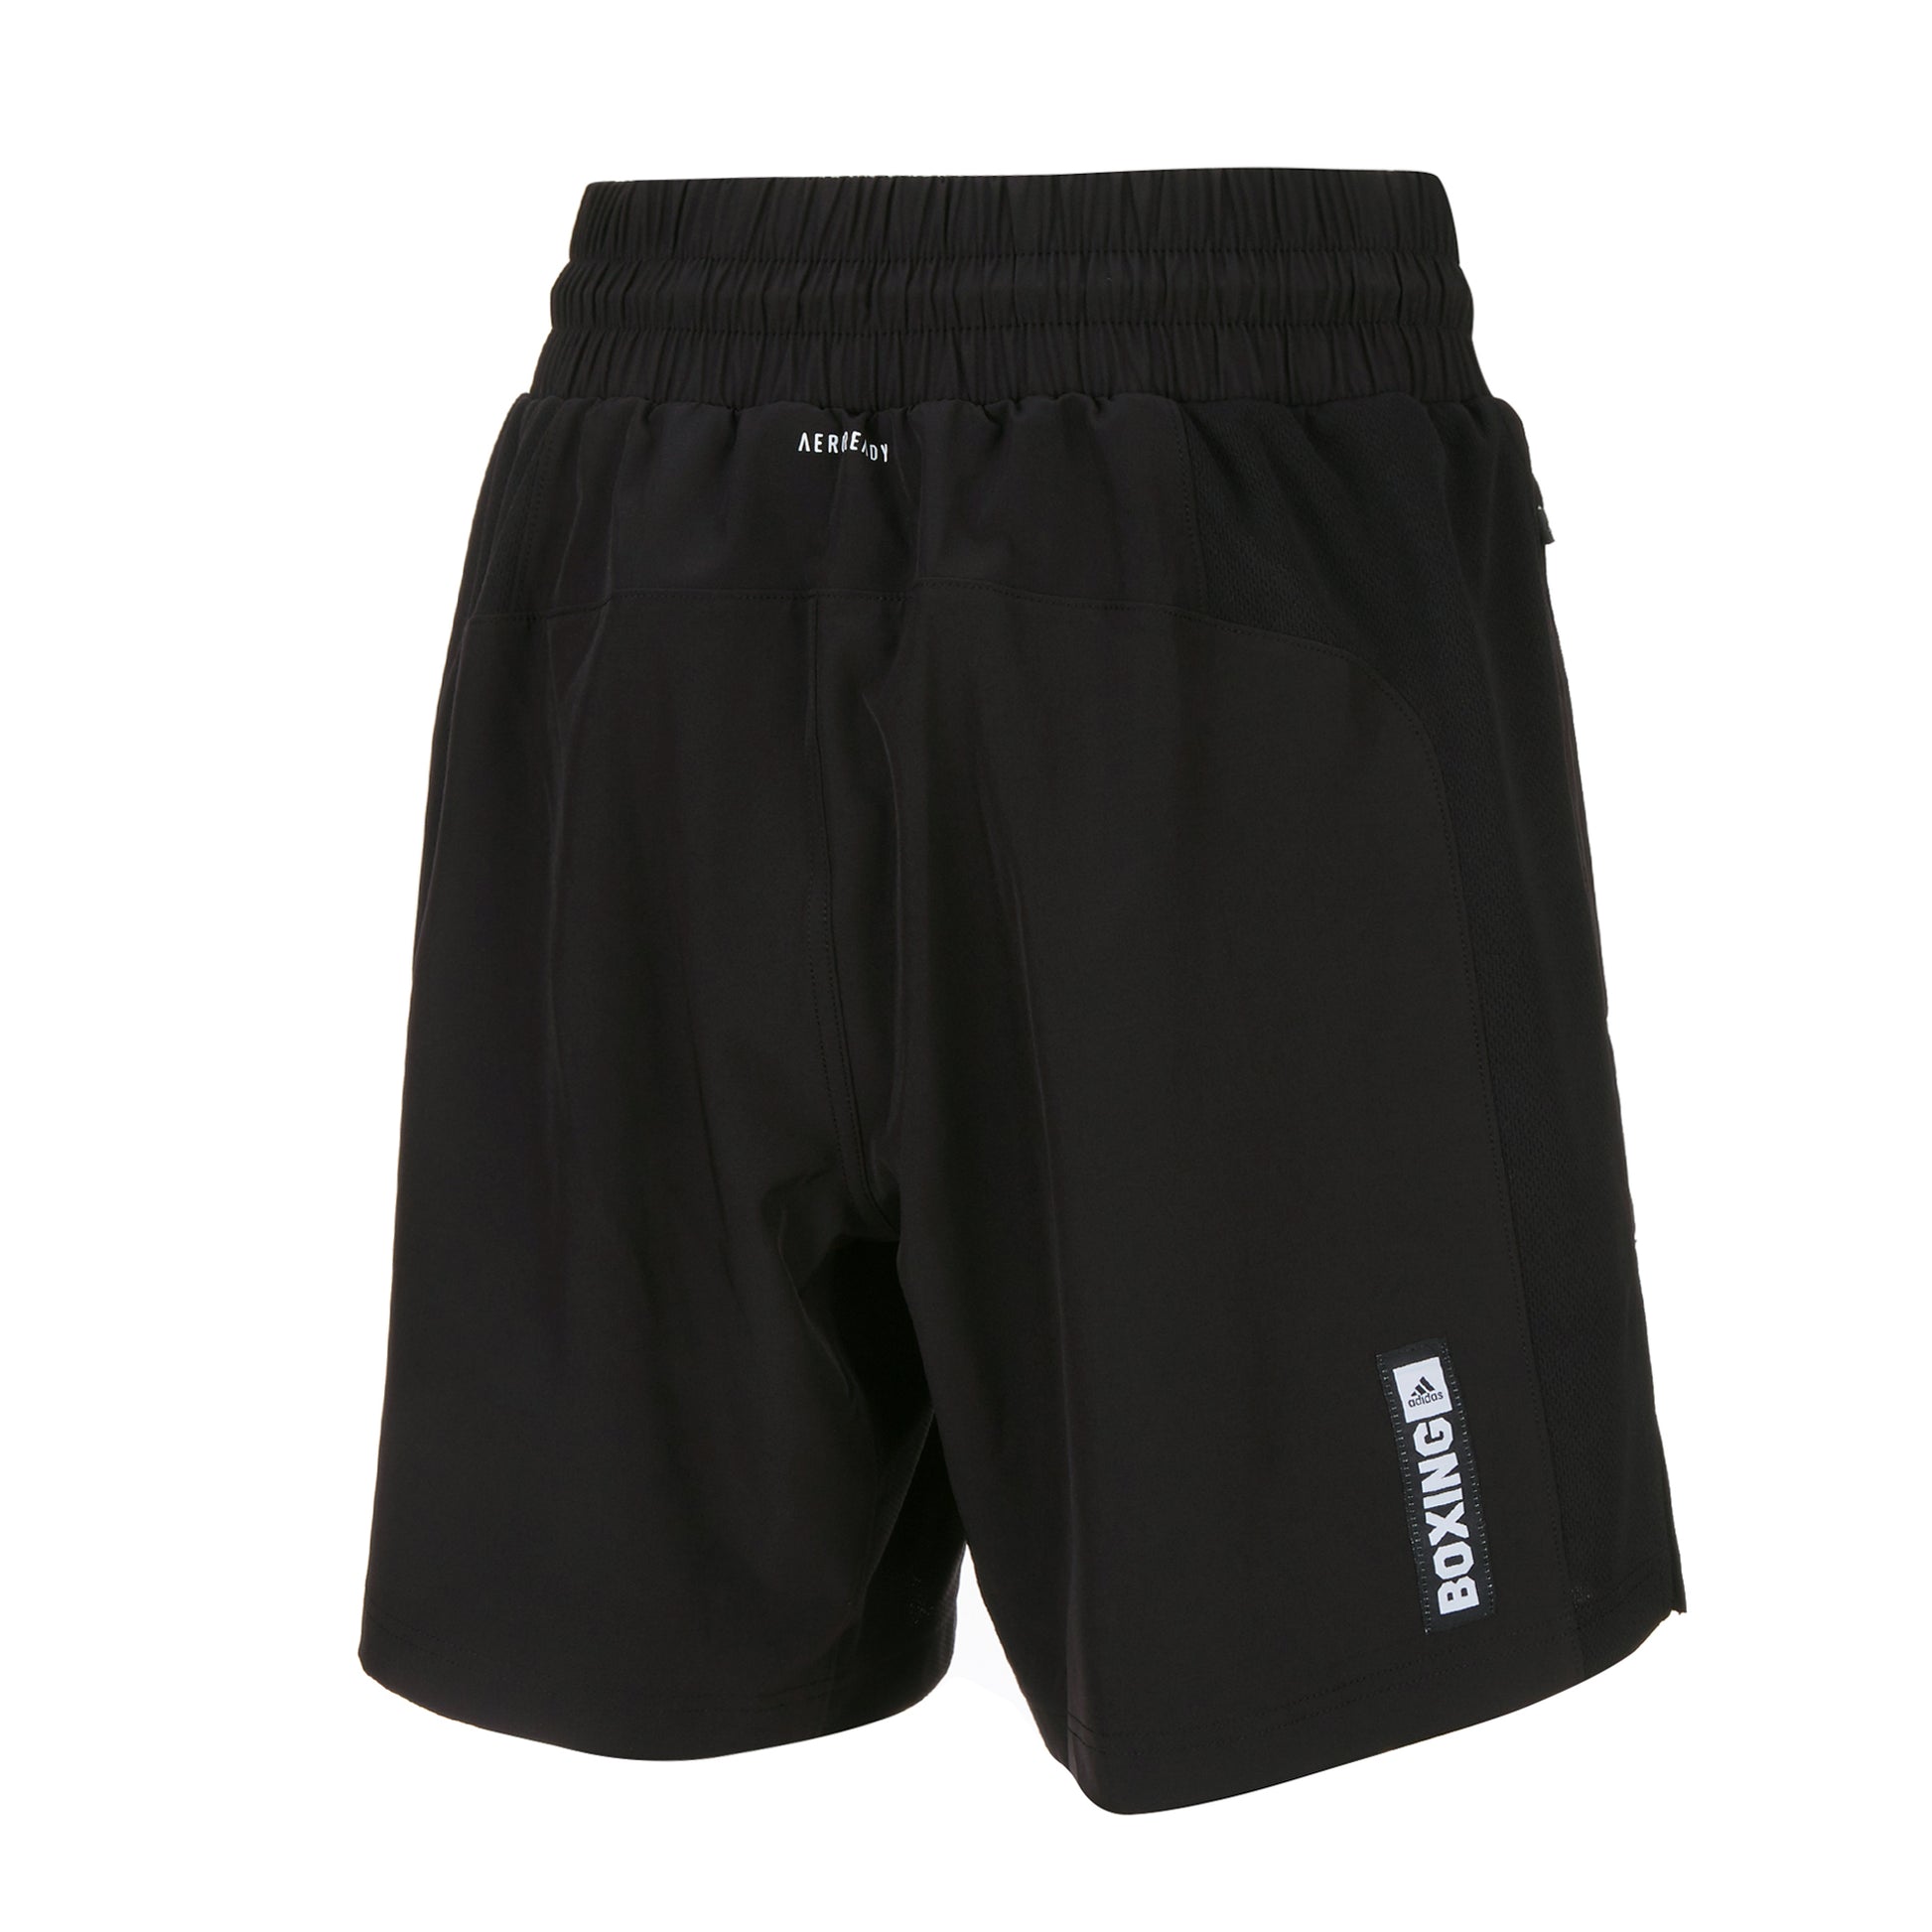 Bxwtsh01 Adidas Boxwear Tech Shorts Black 02